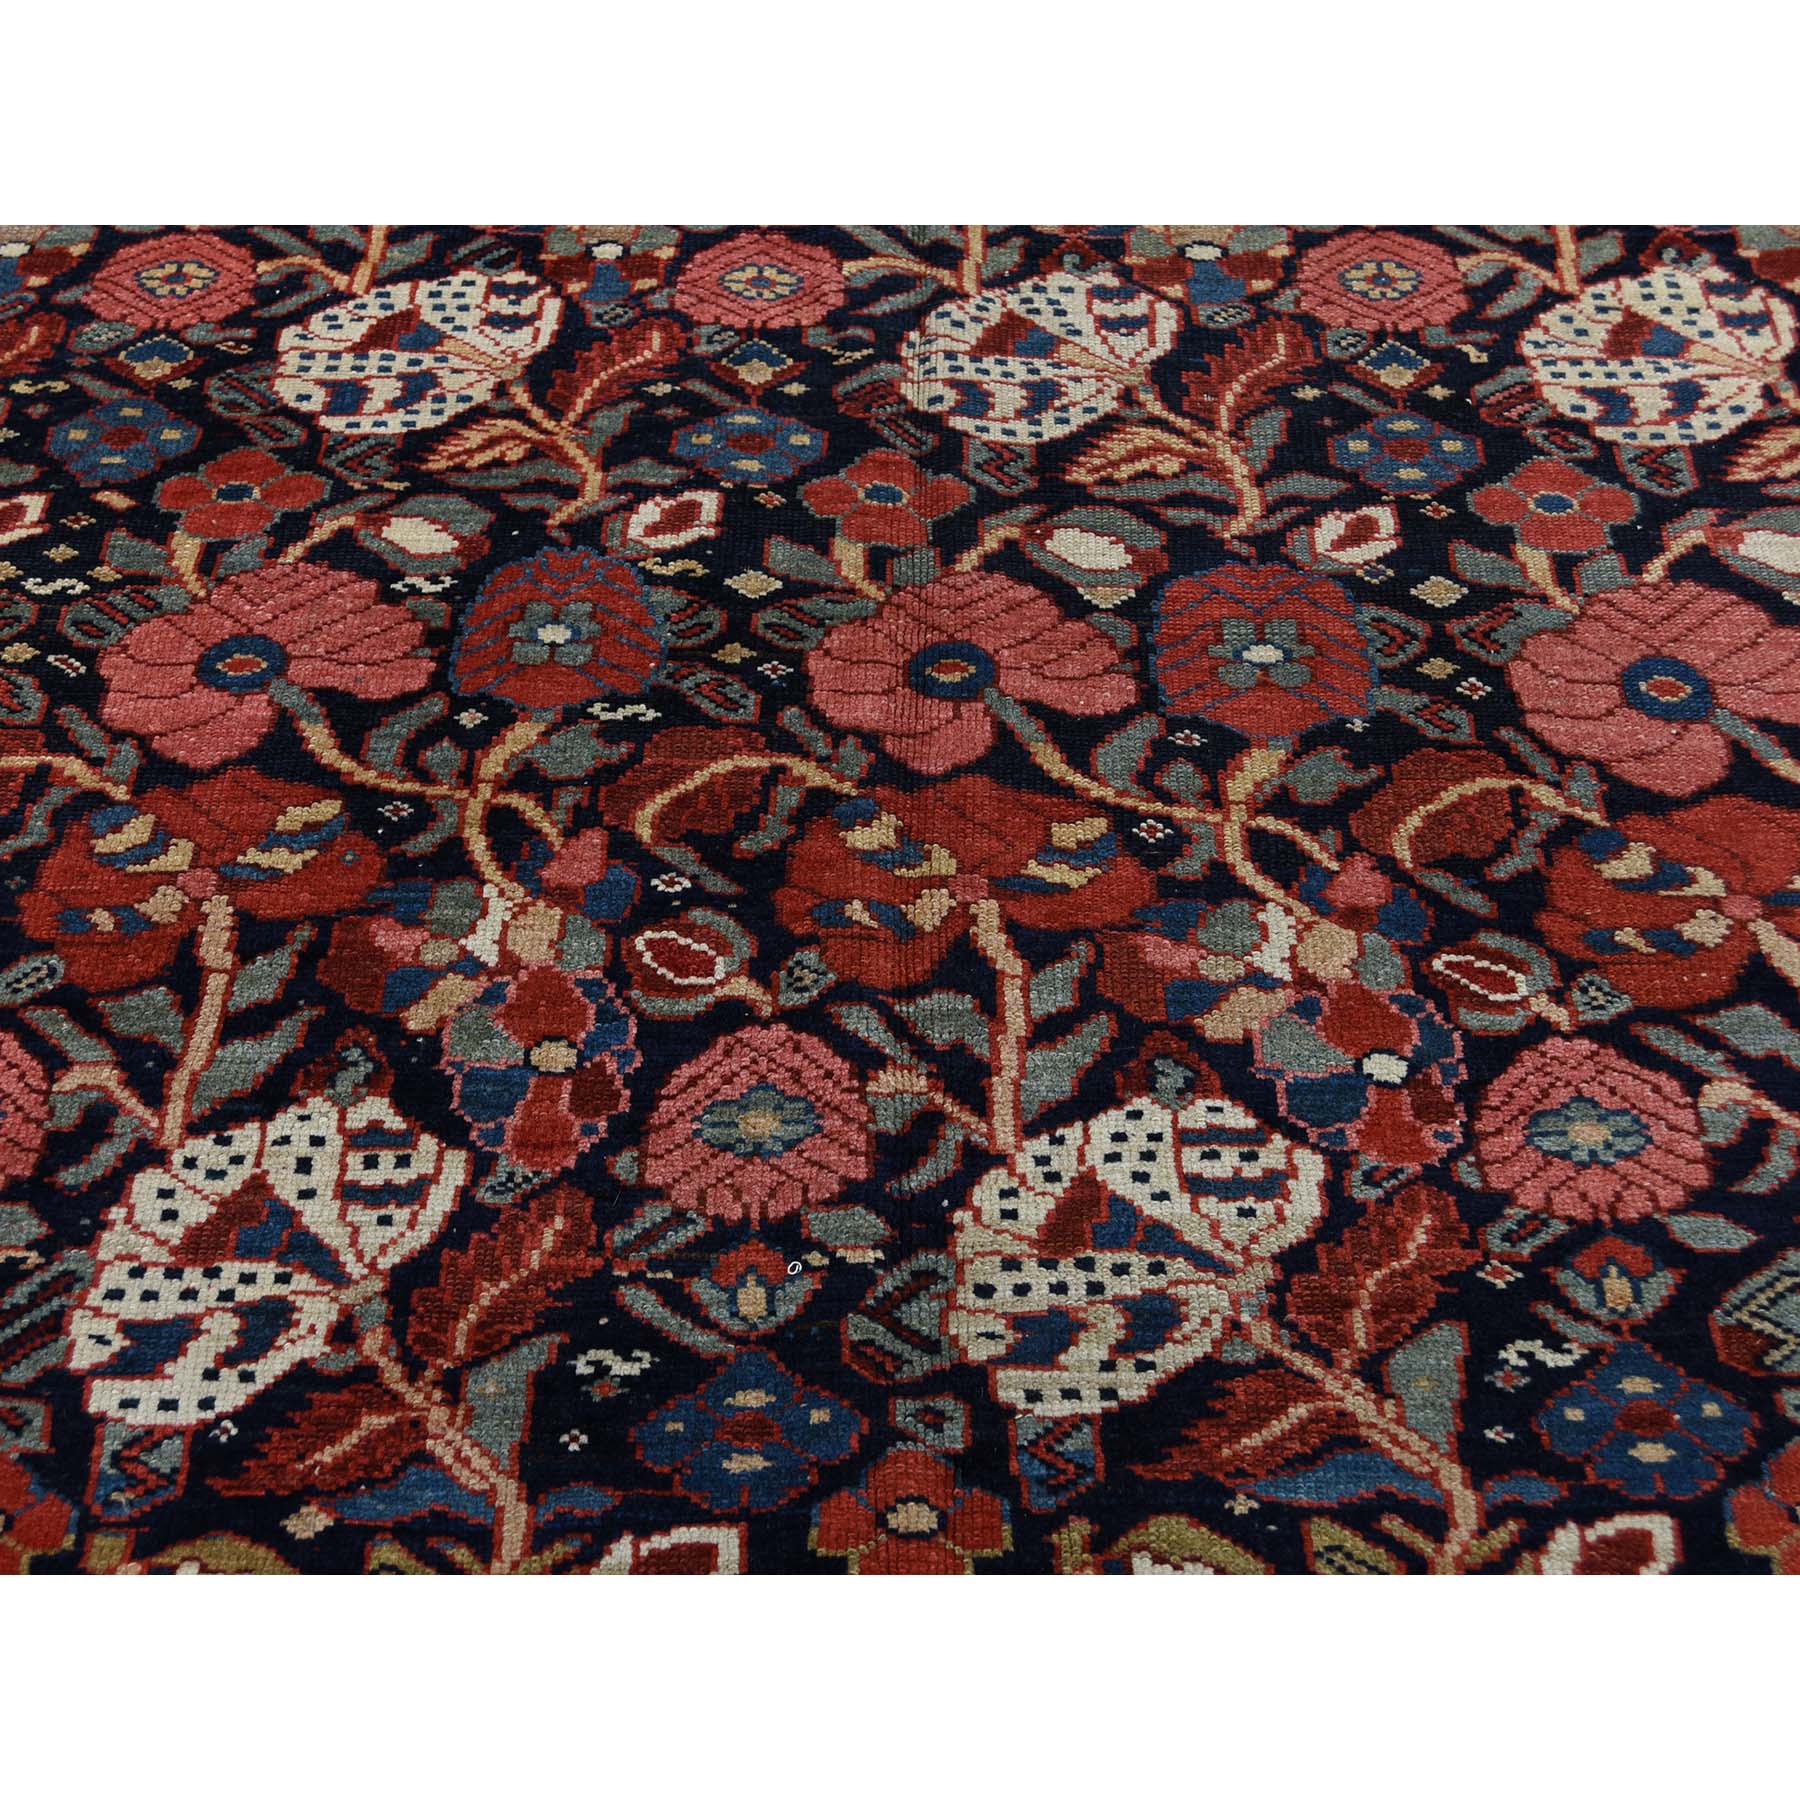 7-4 x19-5  Antique Persian Bakhtiari Wide Gallery Runner Flower Design Hand-Knotted Oriental Rug 